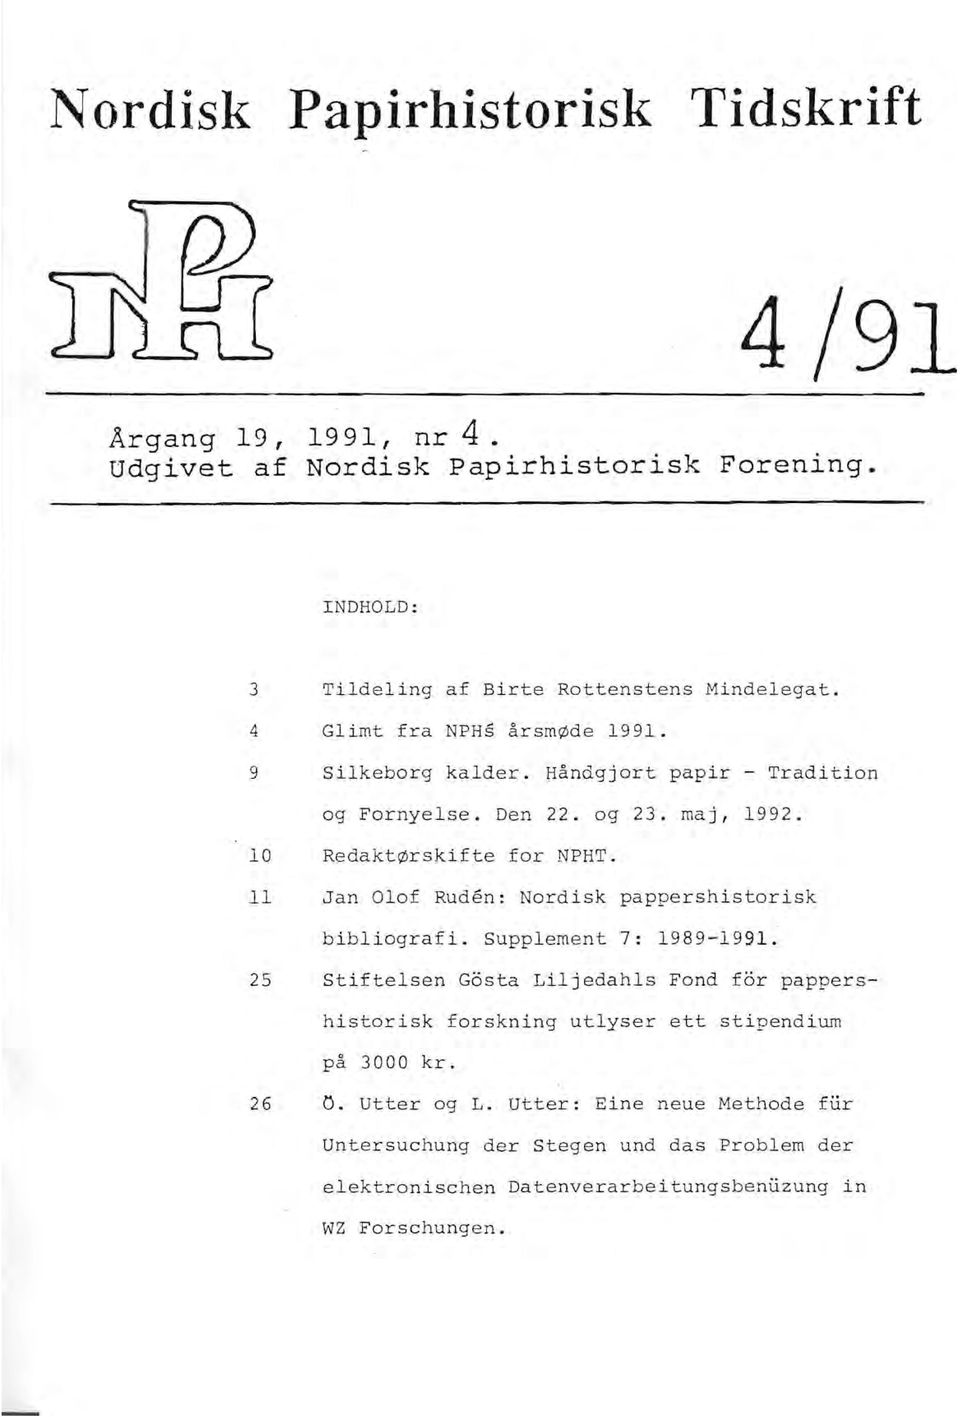 11 Jan Olof Ruden: Nordisk pappershistorisk bibliografi. Supplement 7: 1989-1991.